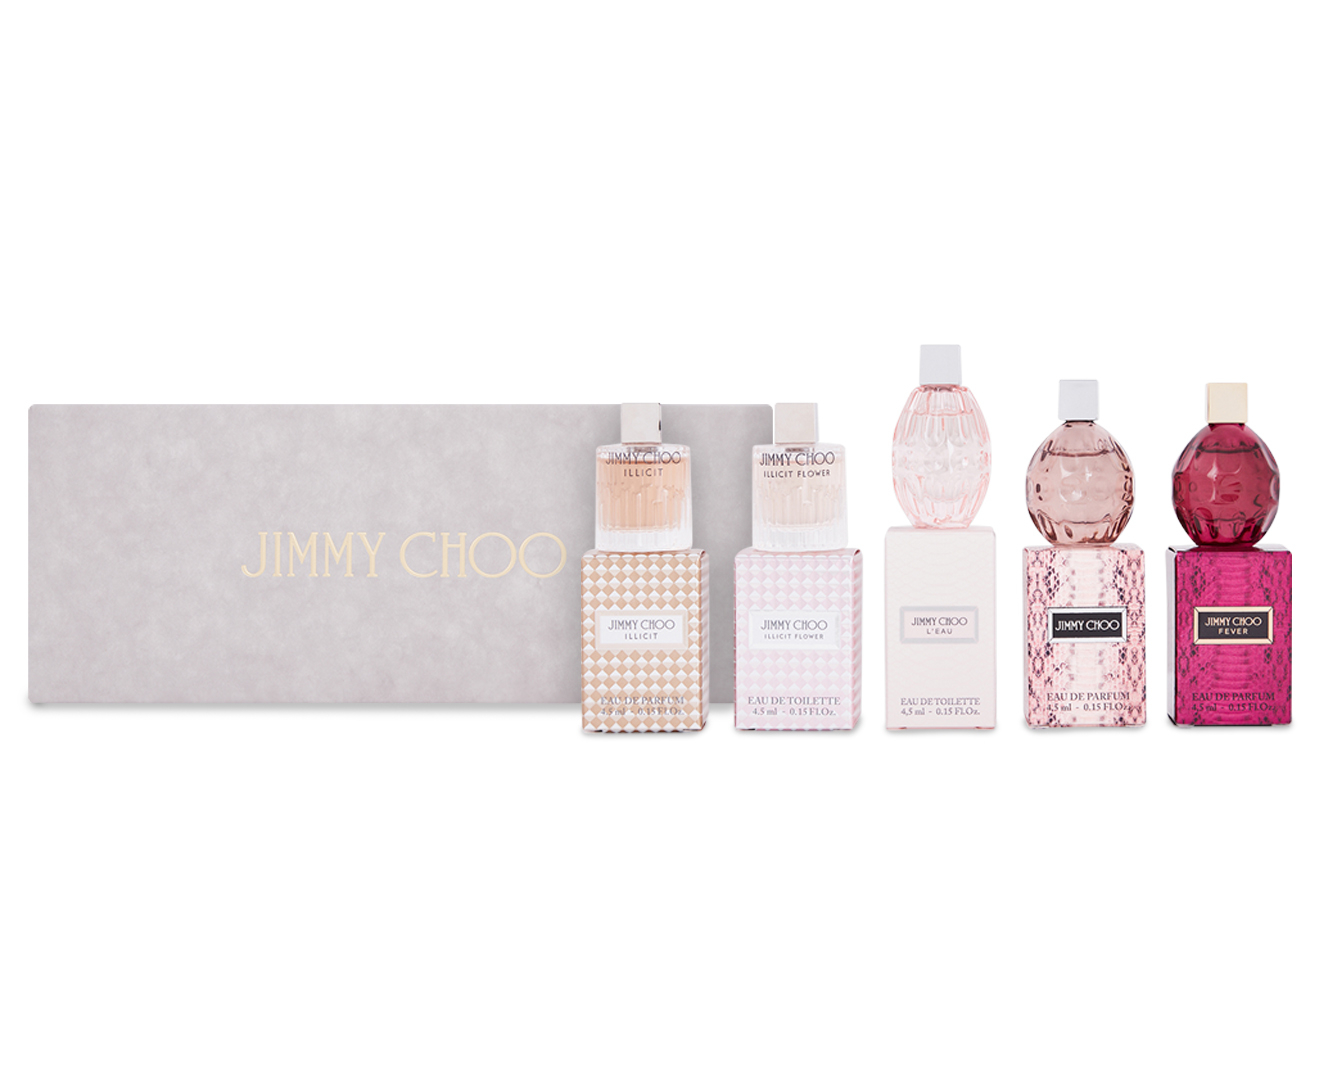 Jimmy Choo Miniatures 5-Piece Perfume Collection | Catch.com.au